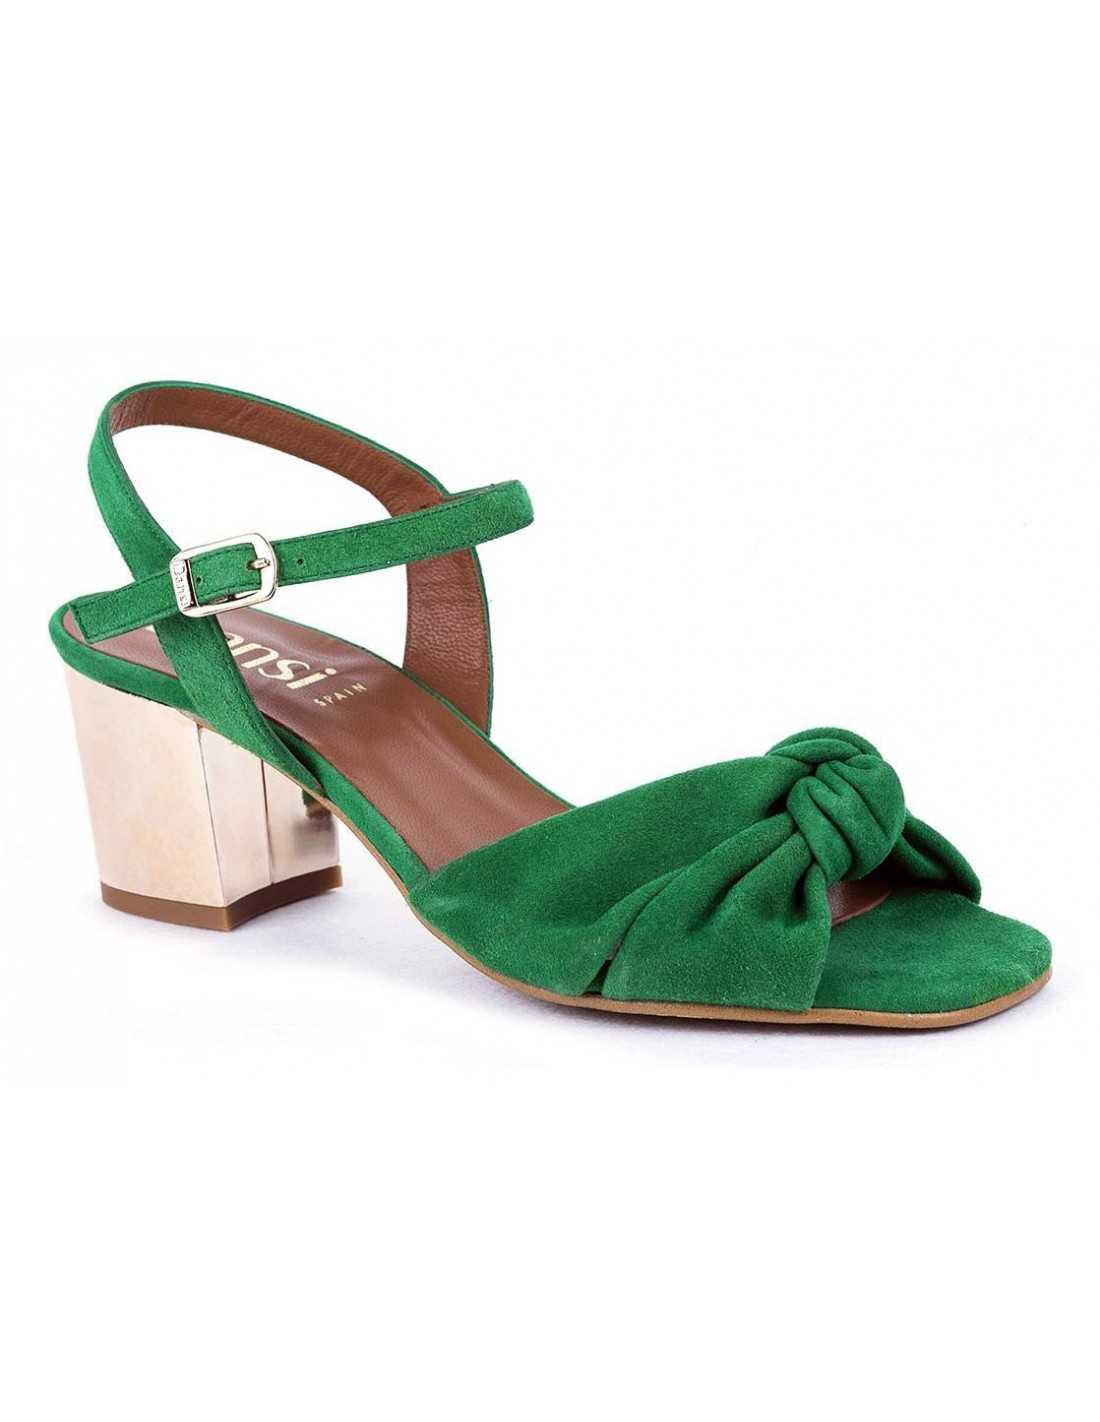 Sandalias de tacón cuadrado, verde, Dansi